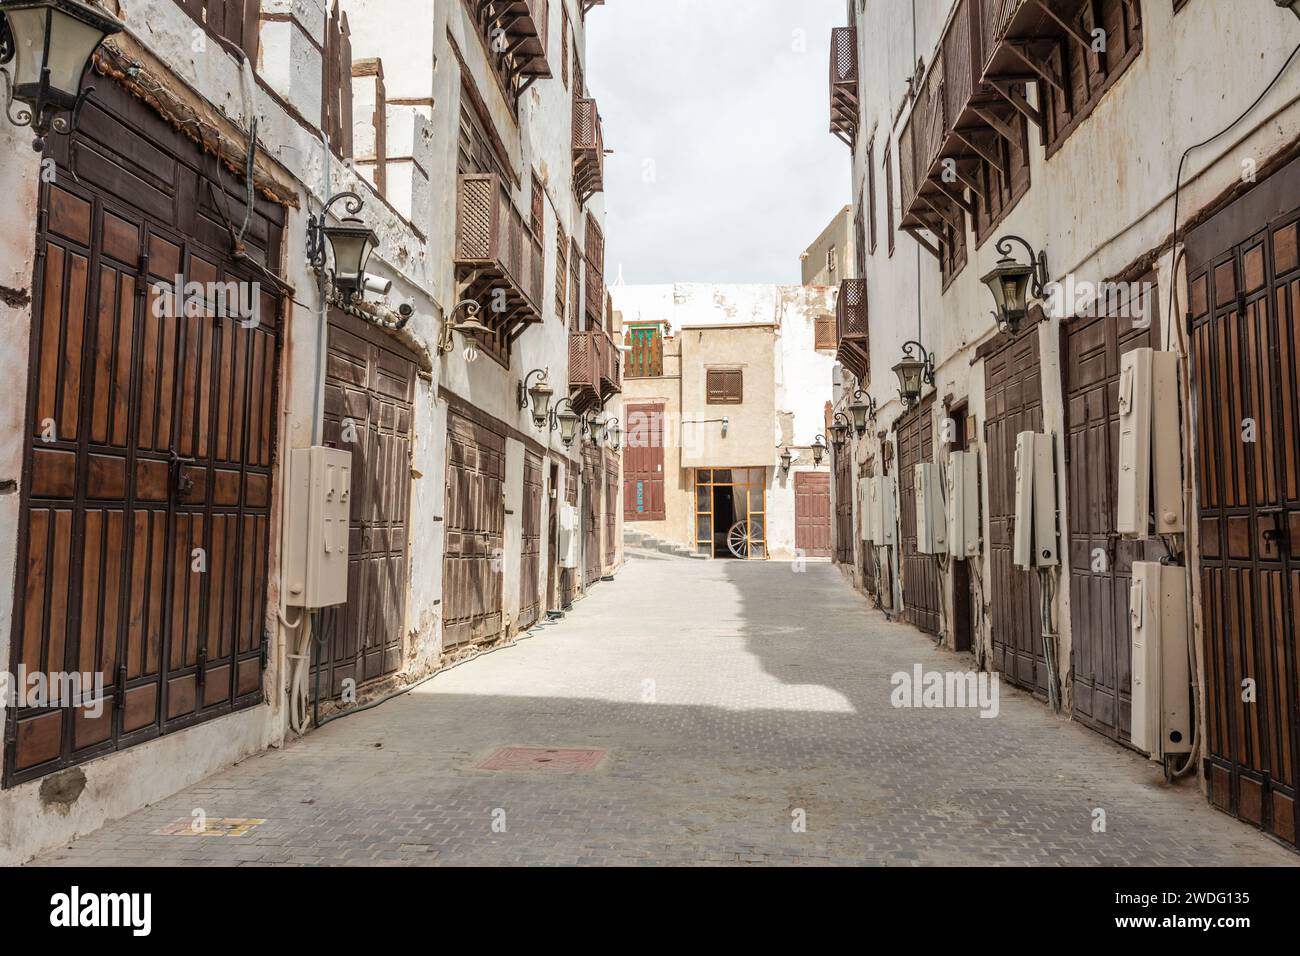 Al-Balad old town street with traditional muslim houses, Jeddah, Saudi Arabia Stock Photo